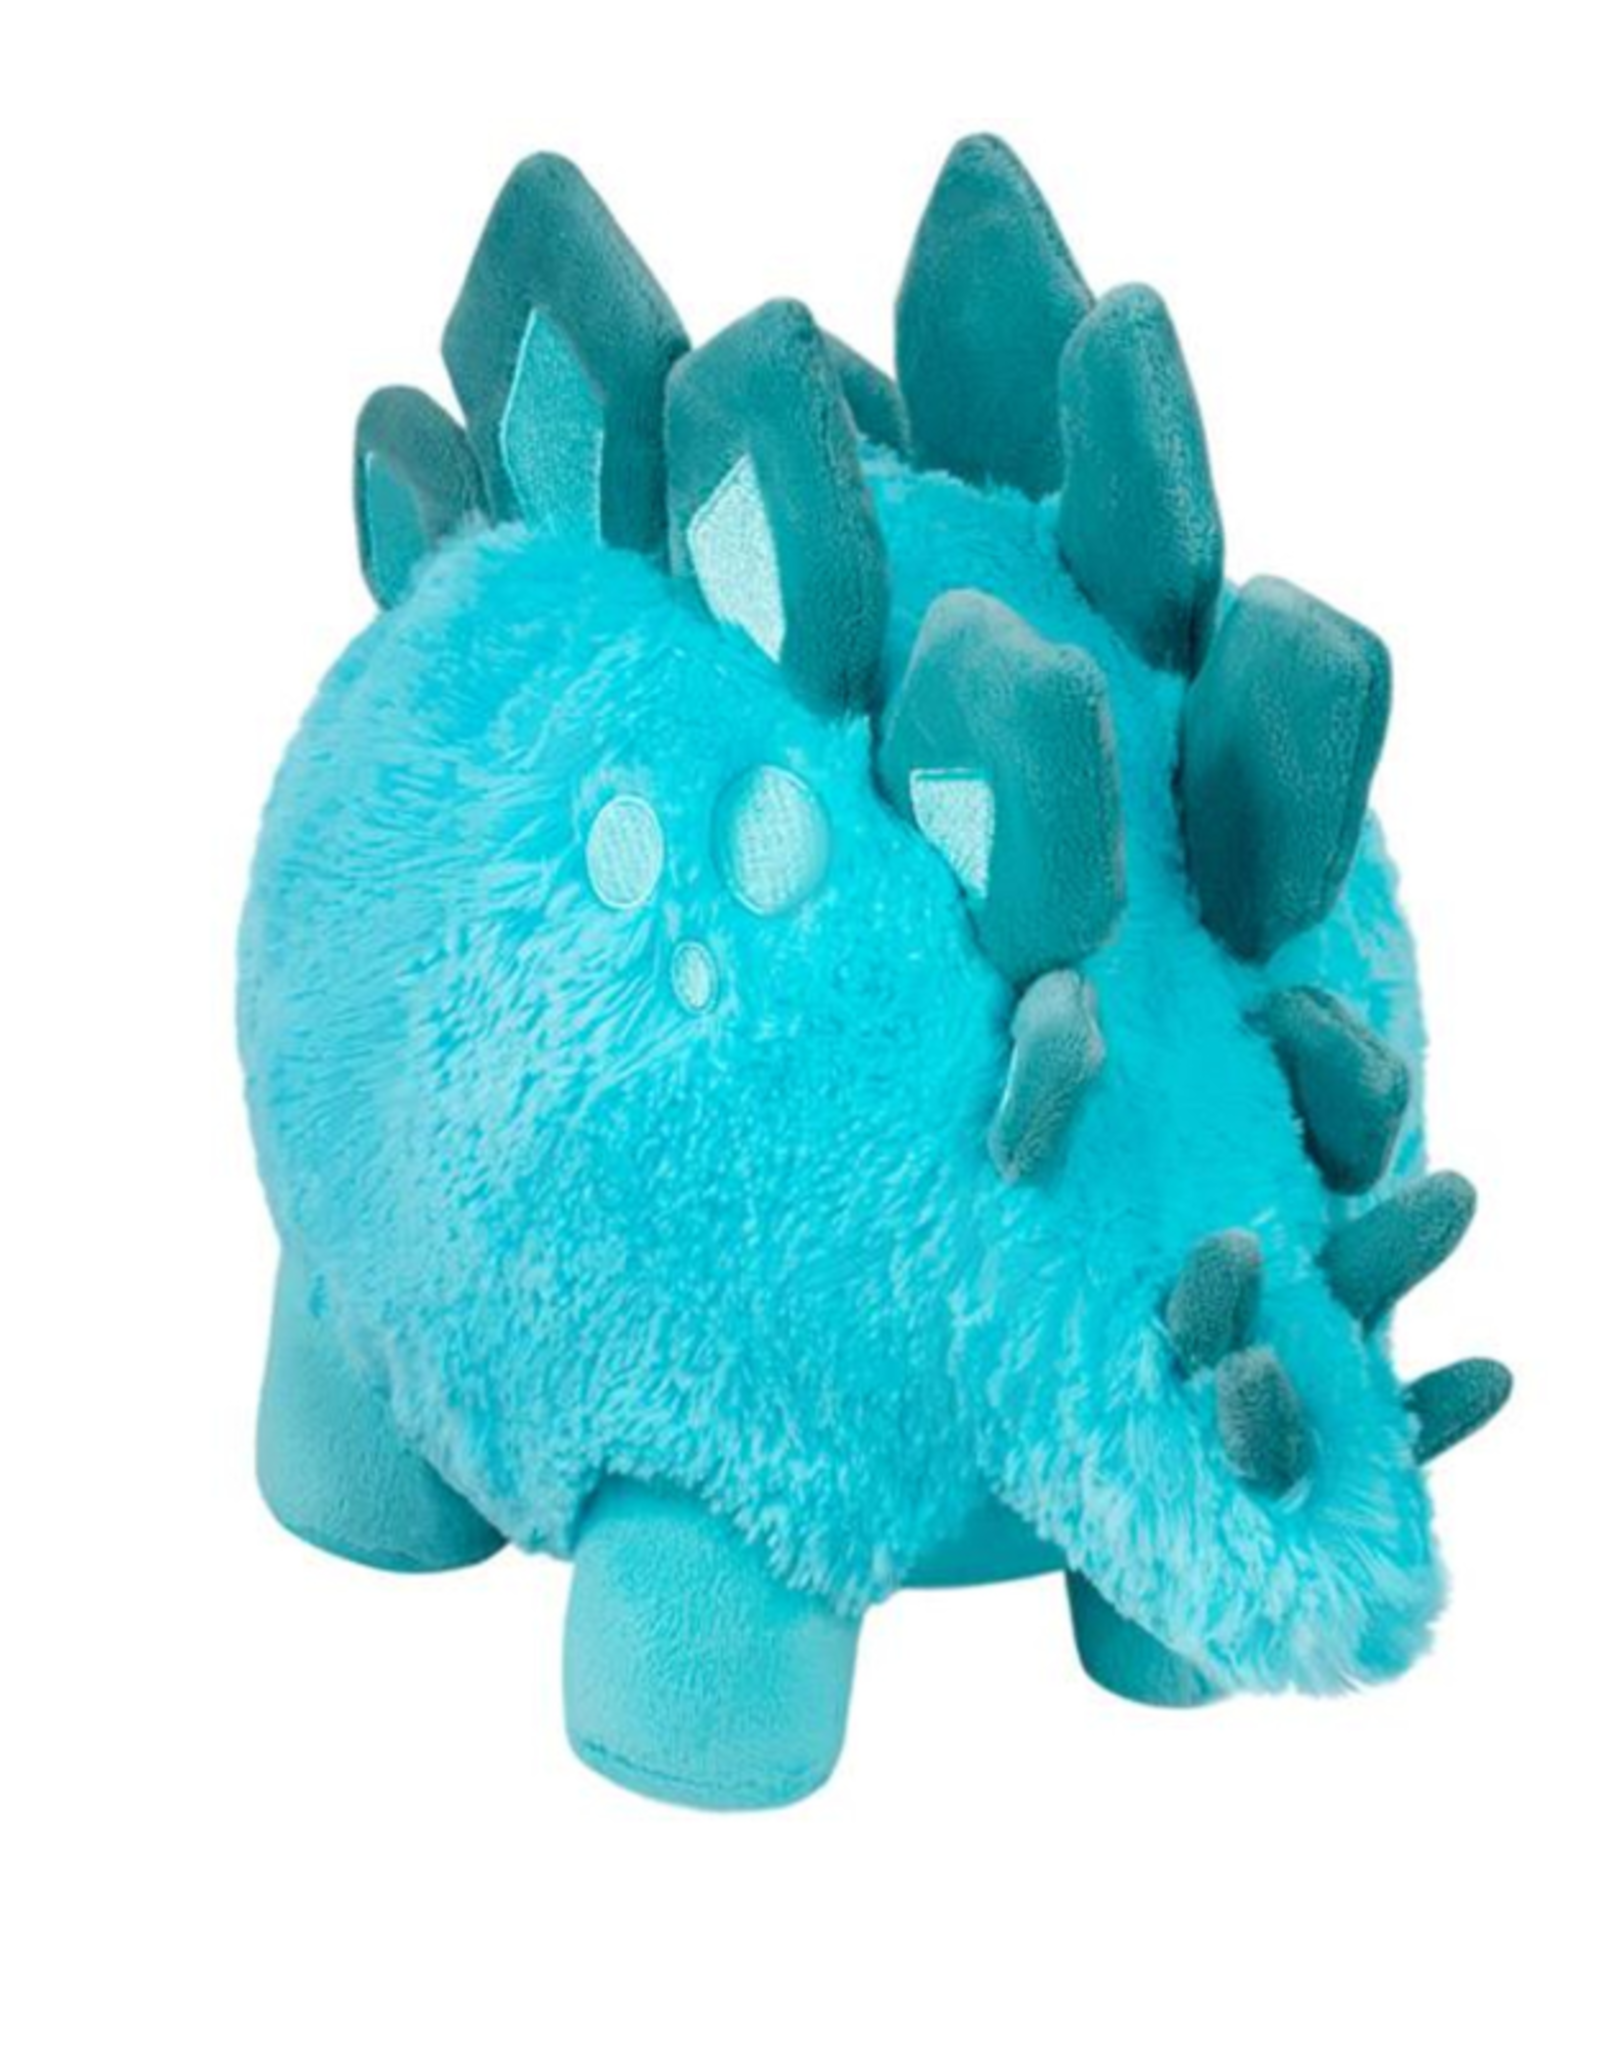 Squishable Mini Squishable: Stegosaurus